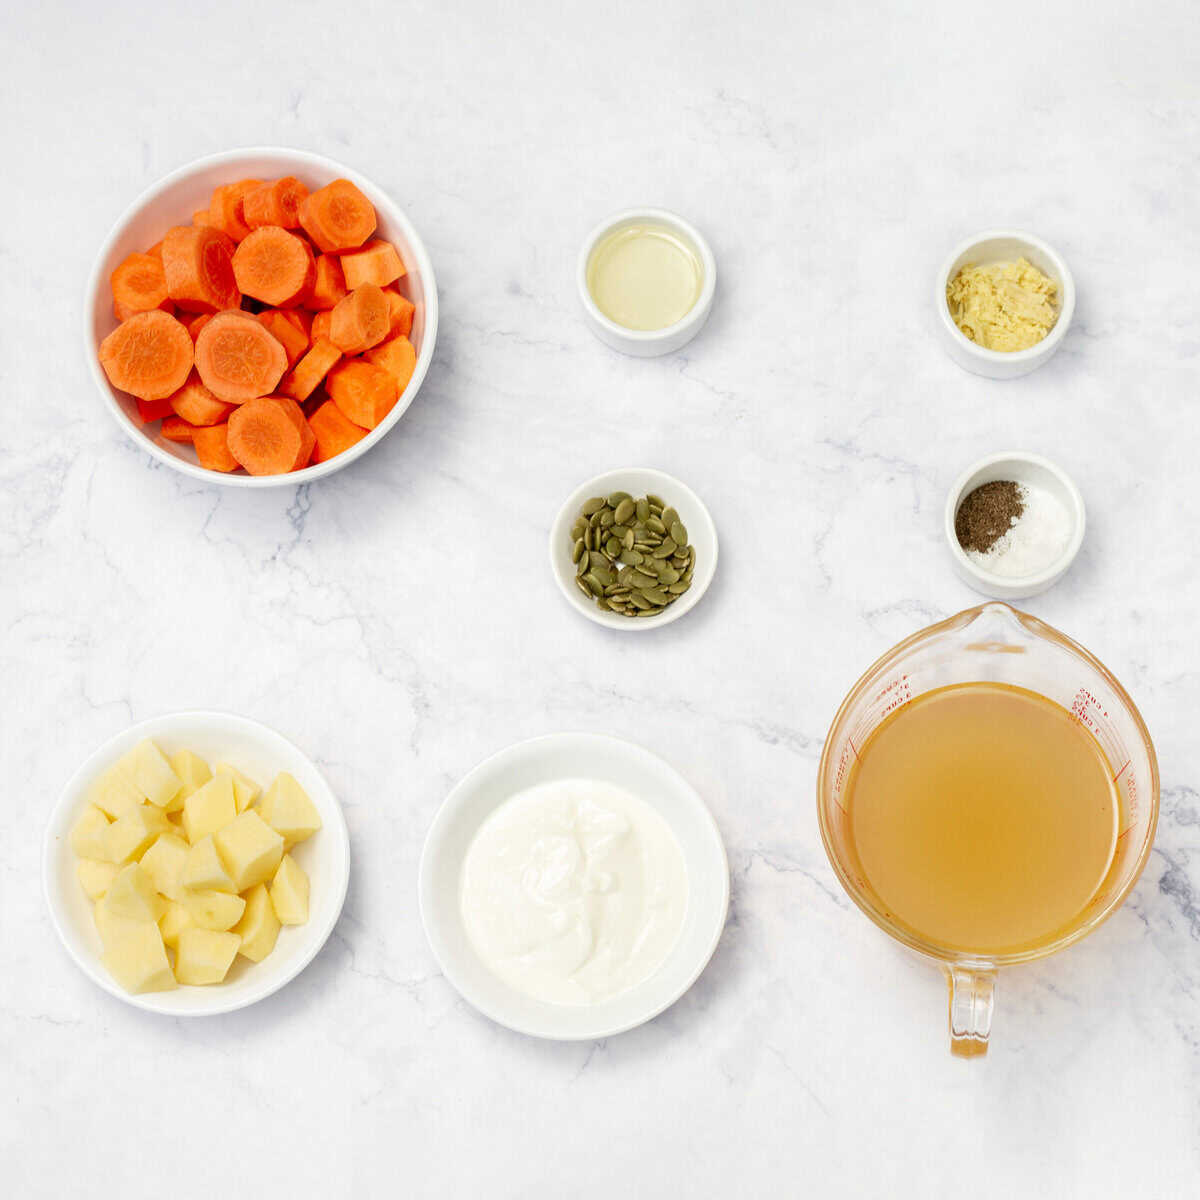 Roasted Carrot Cream Ingredients